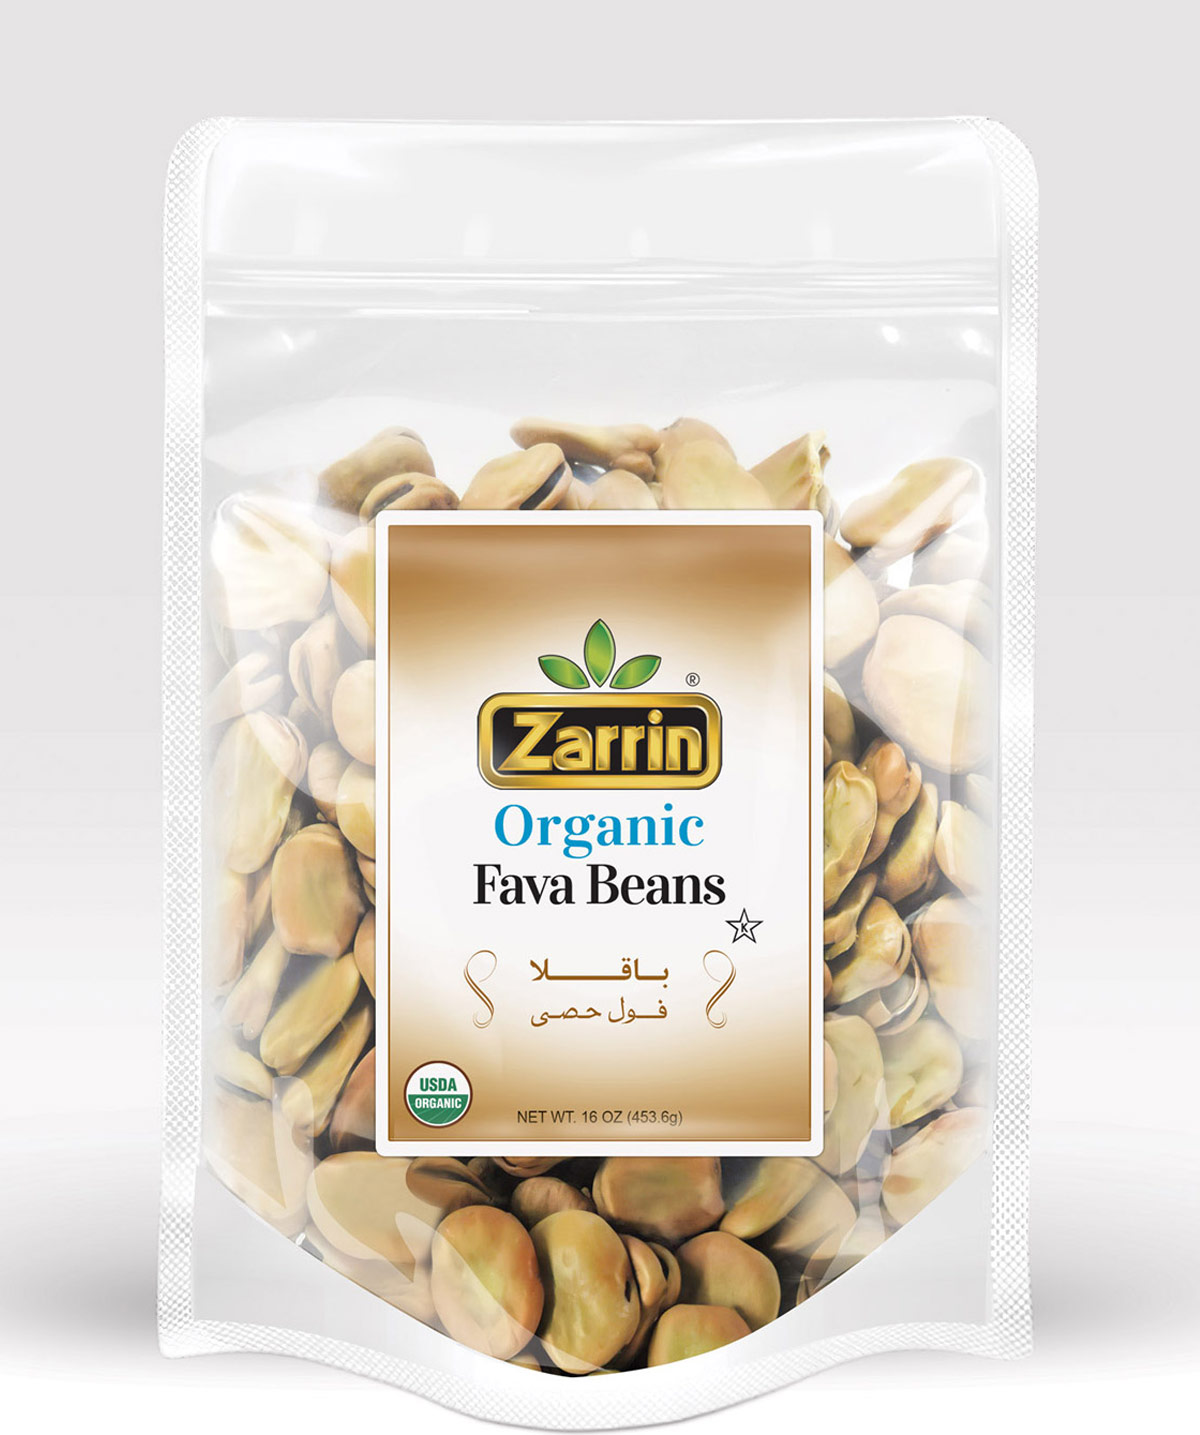 Zarrin Organic Fava Beans